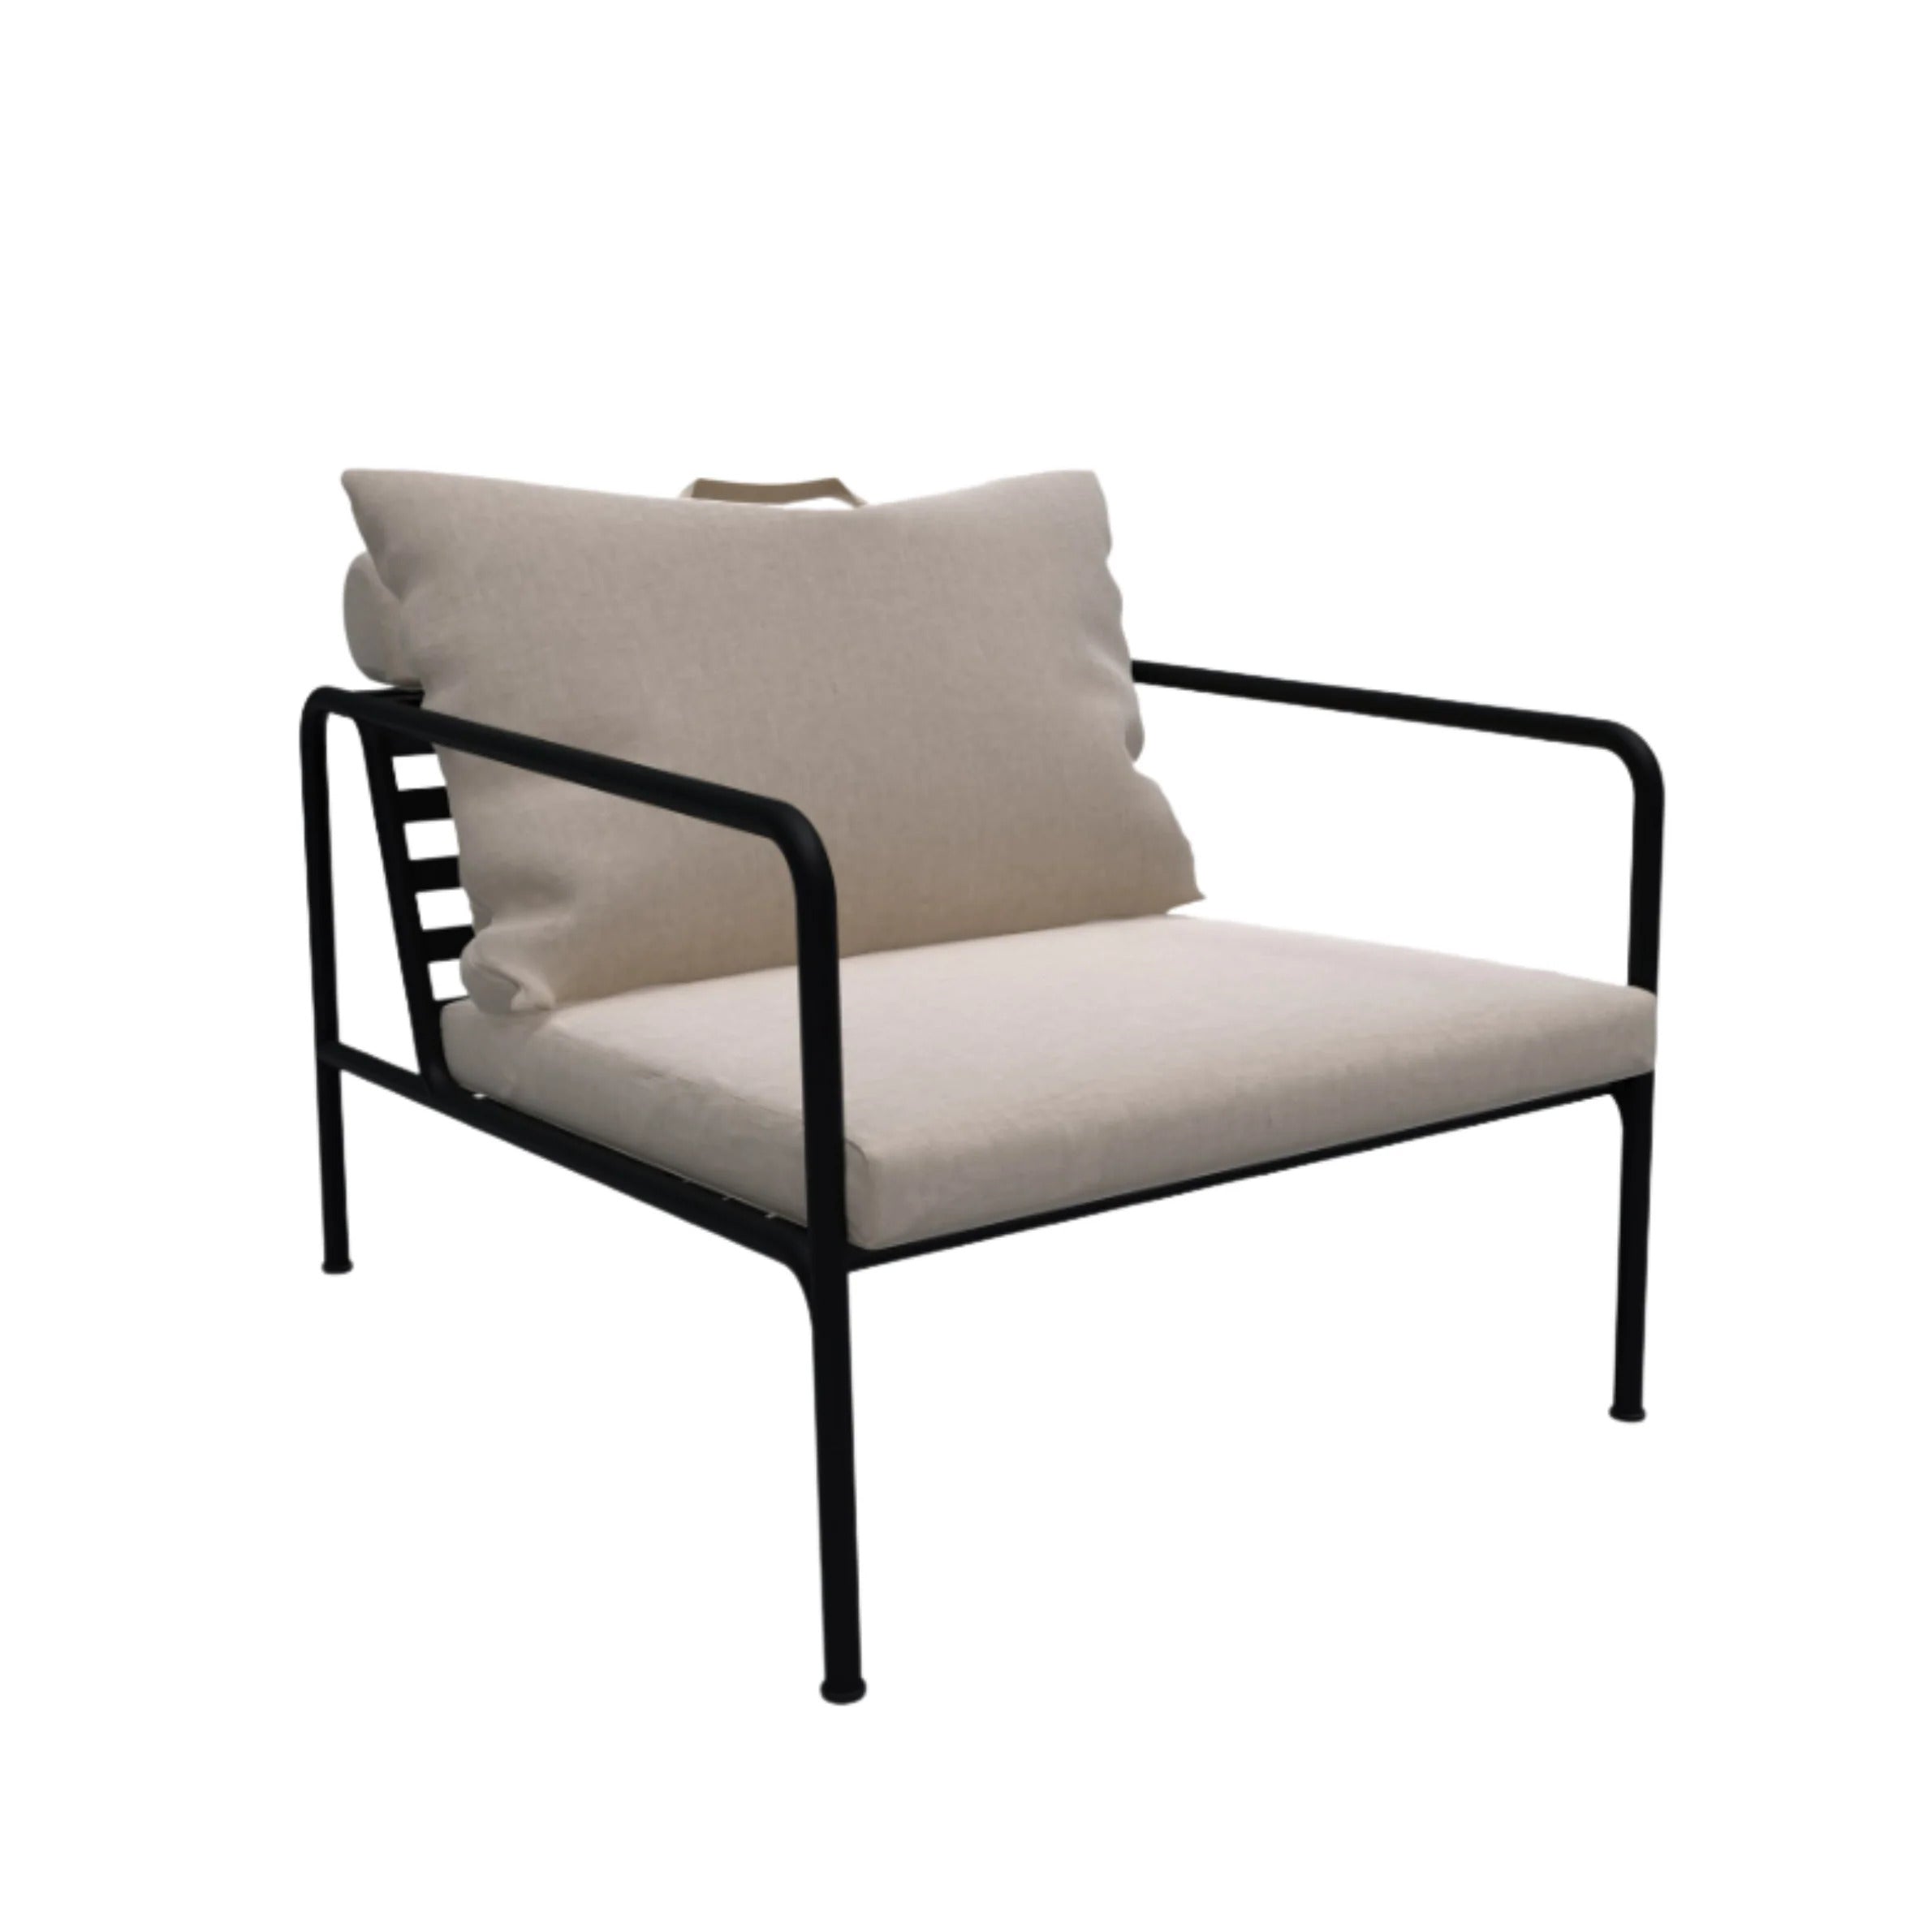 Avon Outdoor Lounge Chair (Ash).